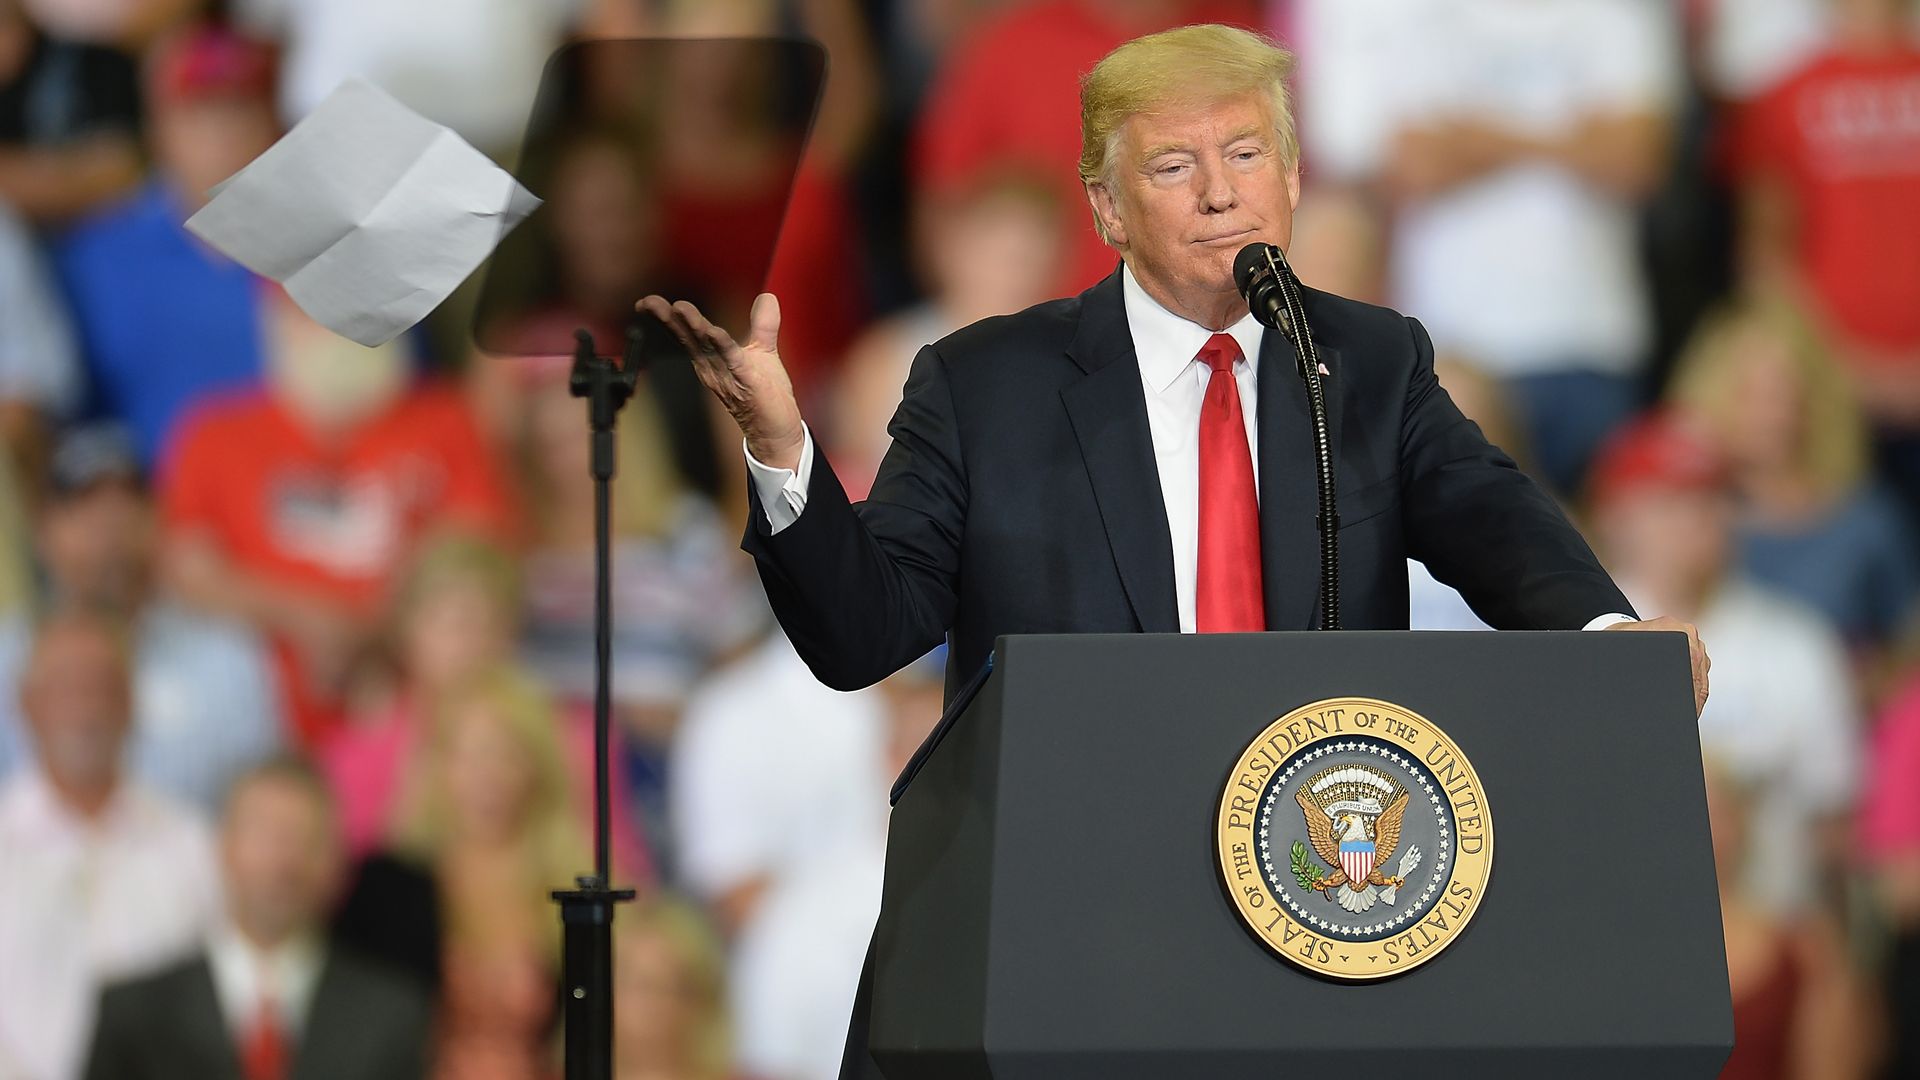 Trump at a 2018 rally. Photo: Michael B. Thomas/Getty Images